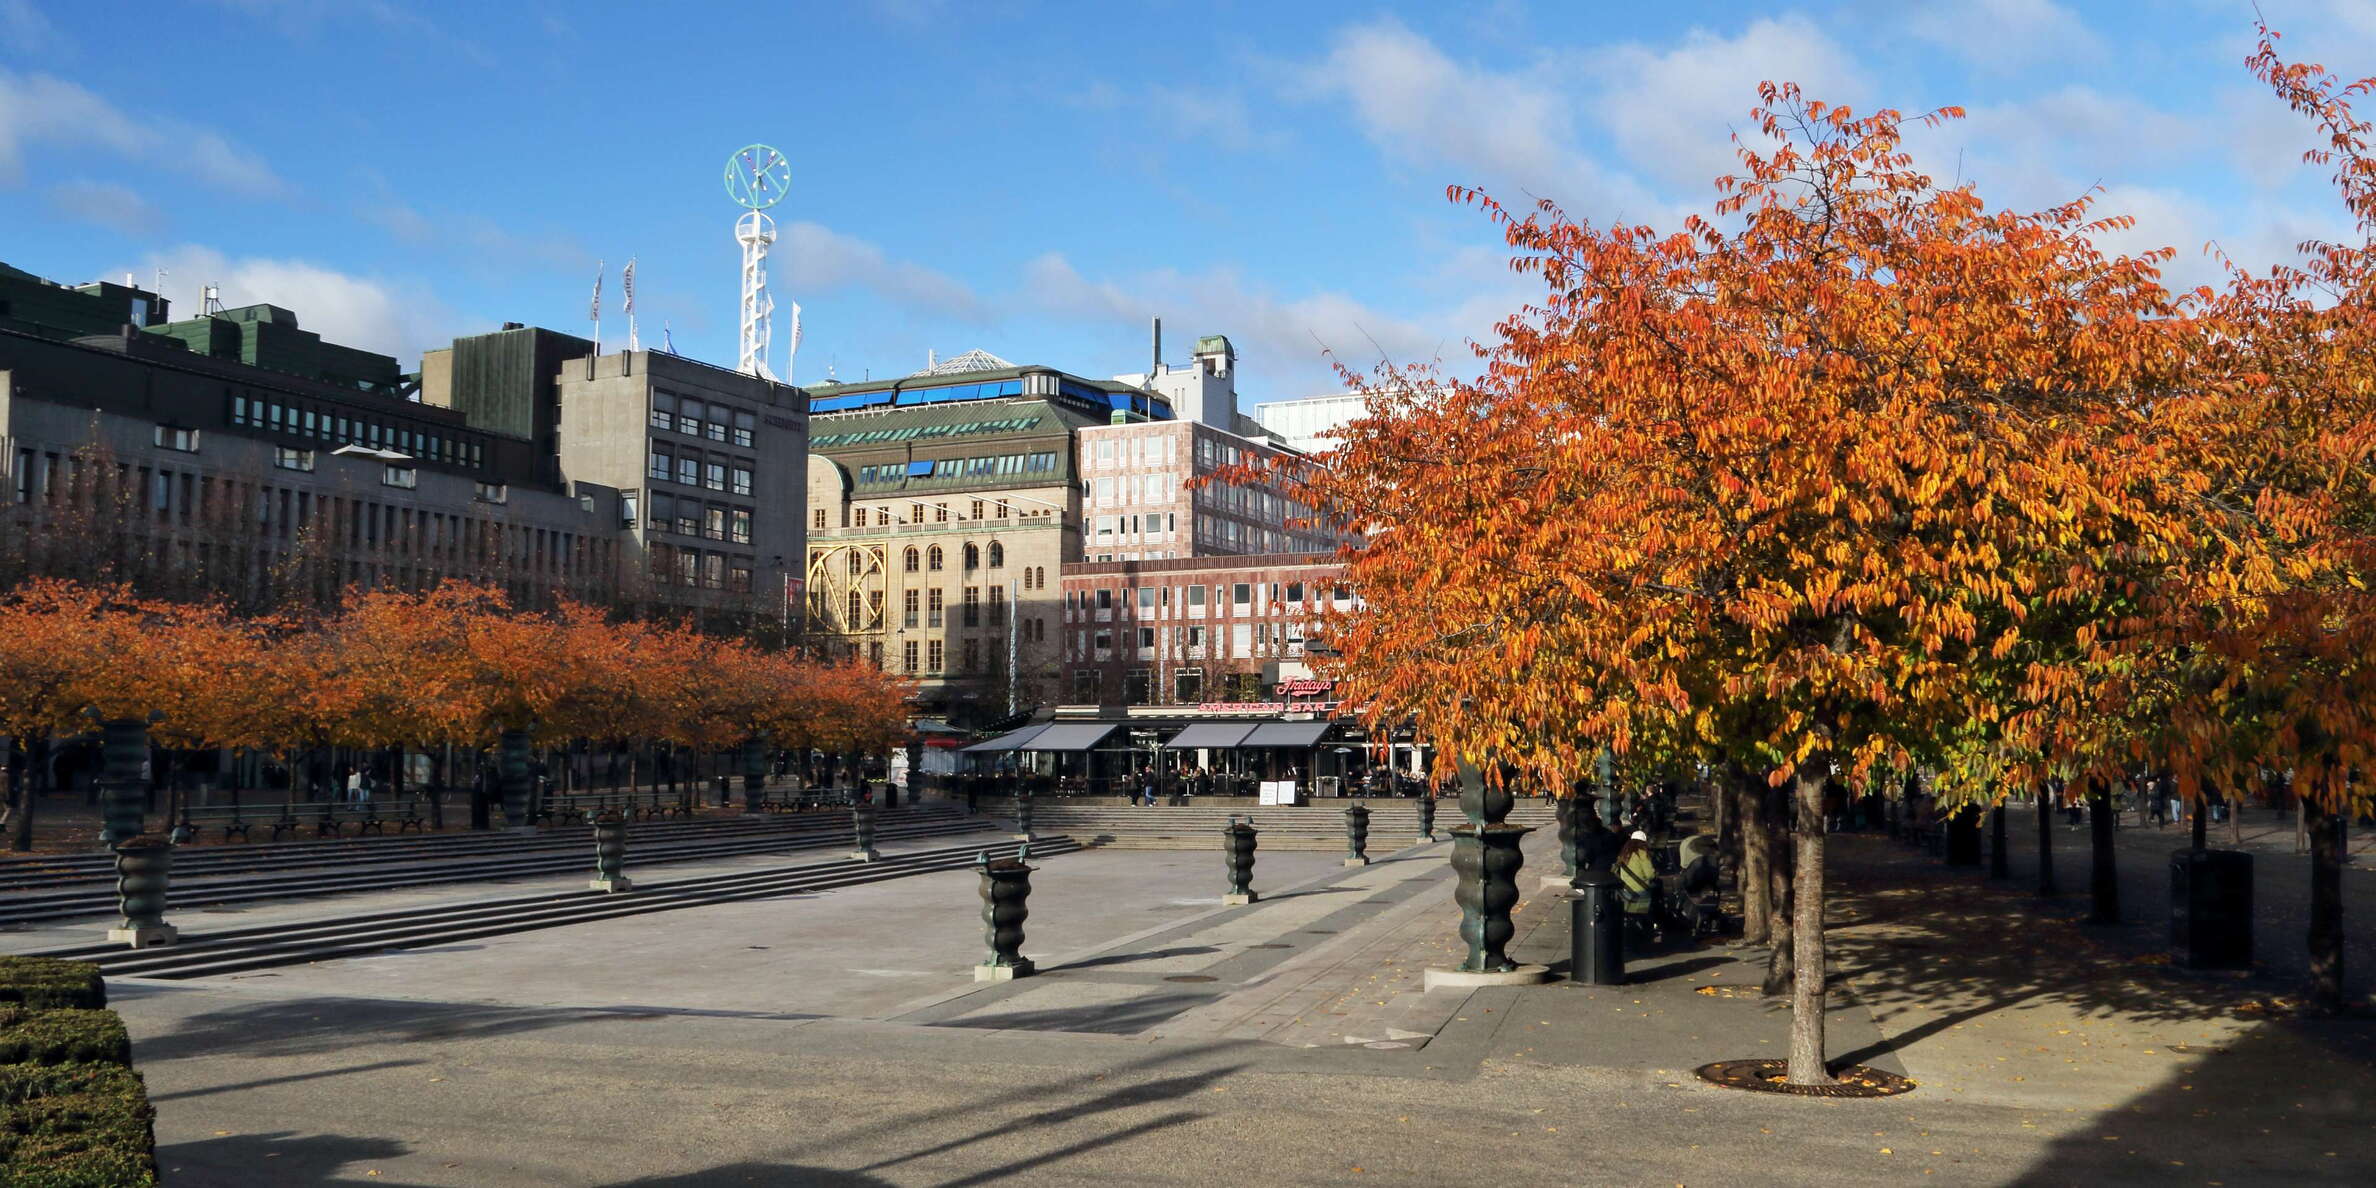 Stockholm | Kungsträdgården with cherry trees